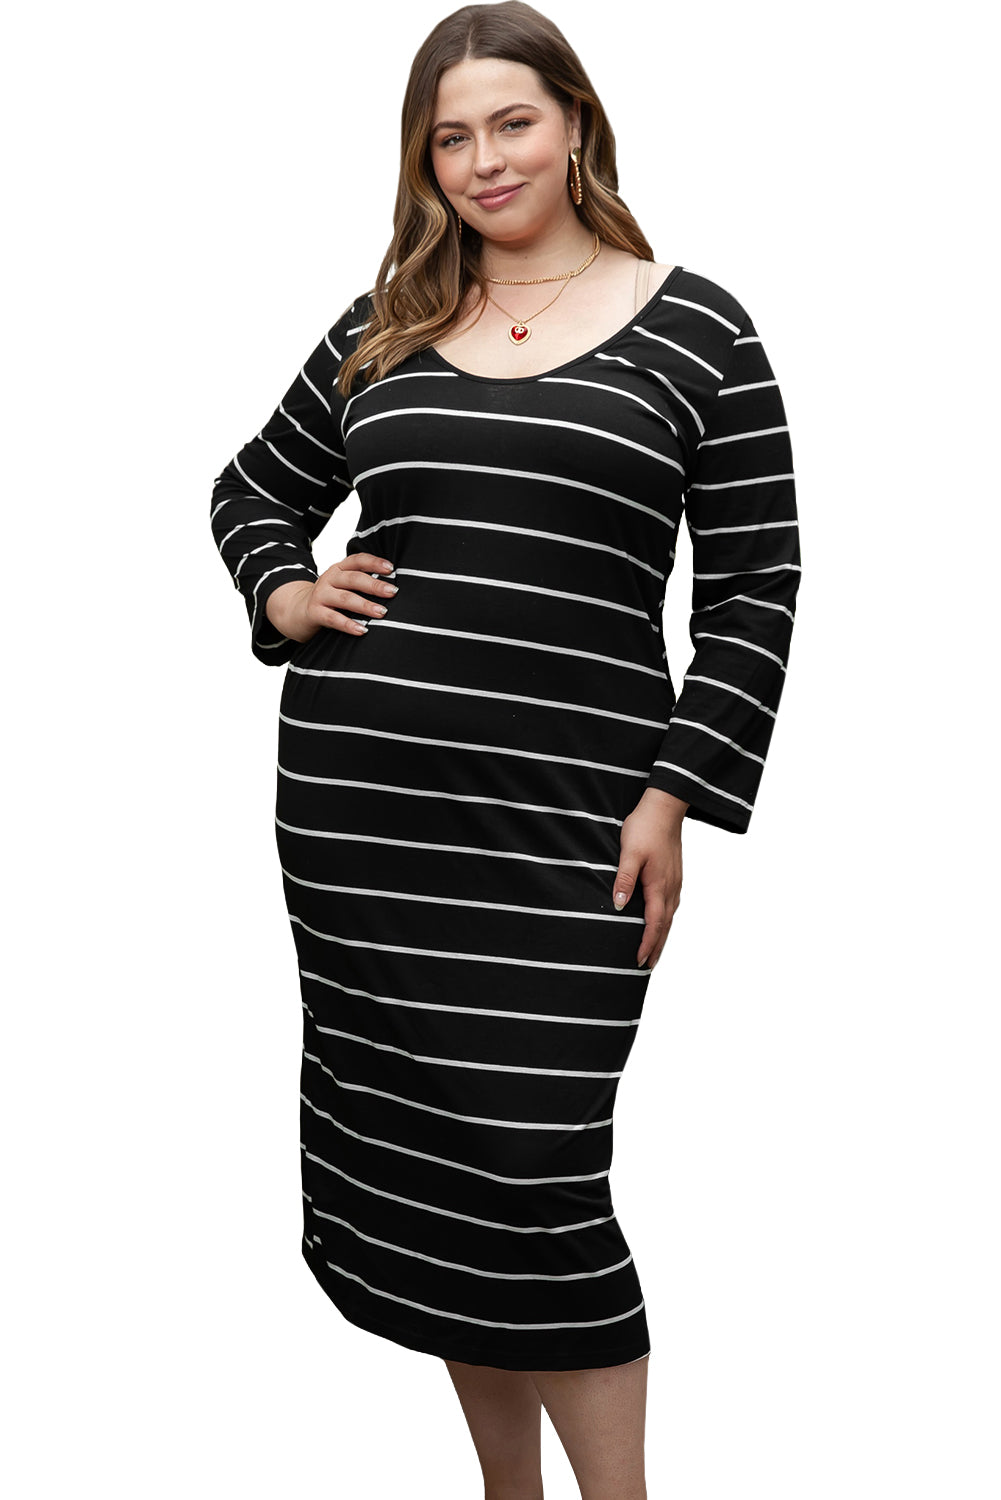 Khaki Stripe Print Open Back Sleeveless Maxi Dress with Slits